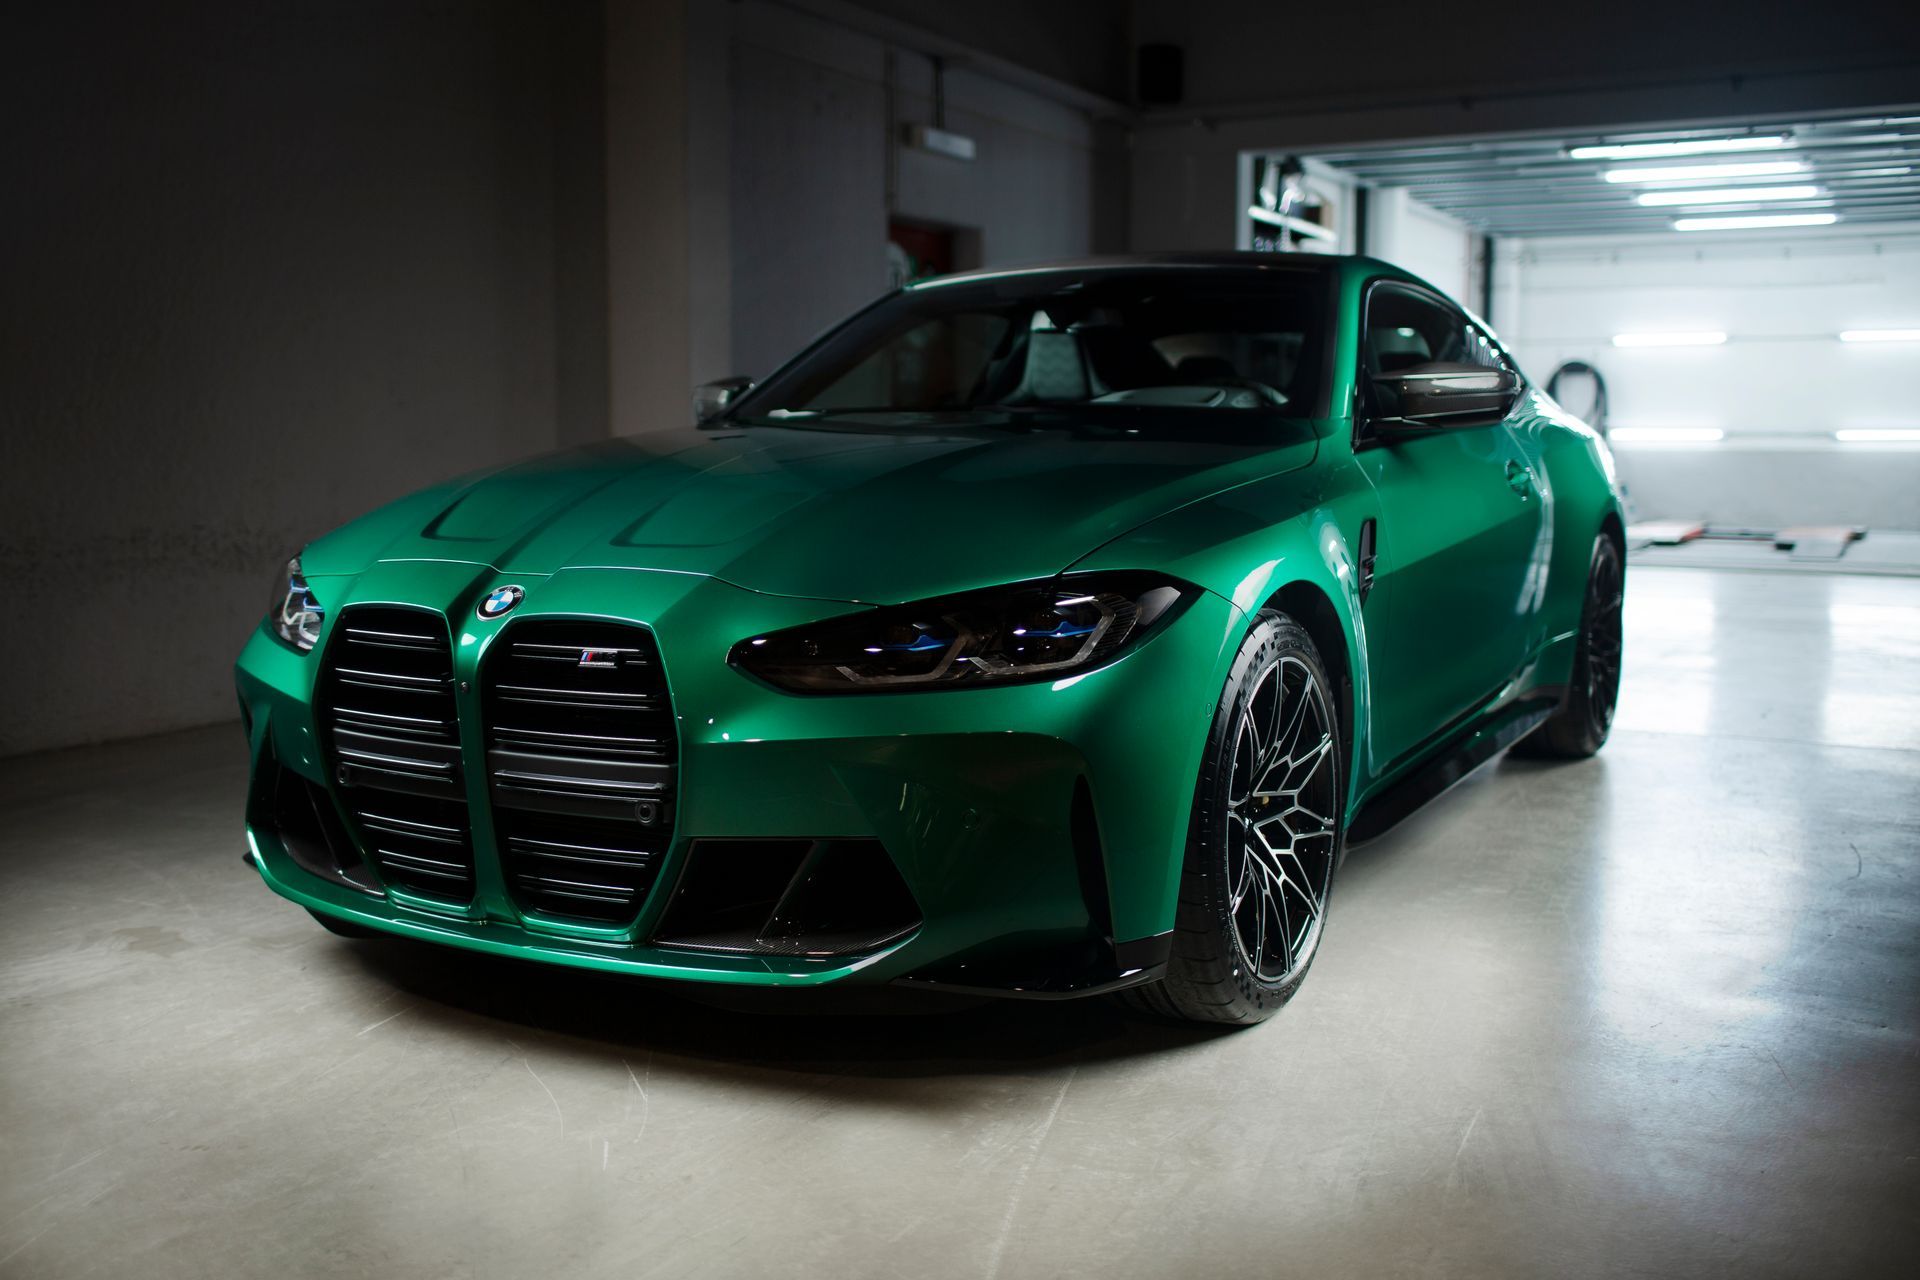 A green bmw m3 is parked in a garage.